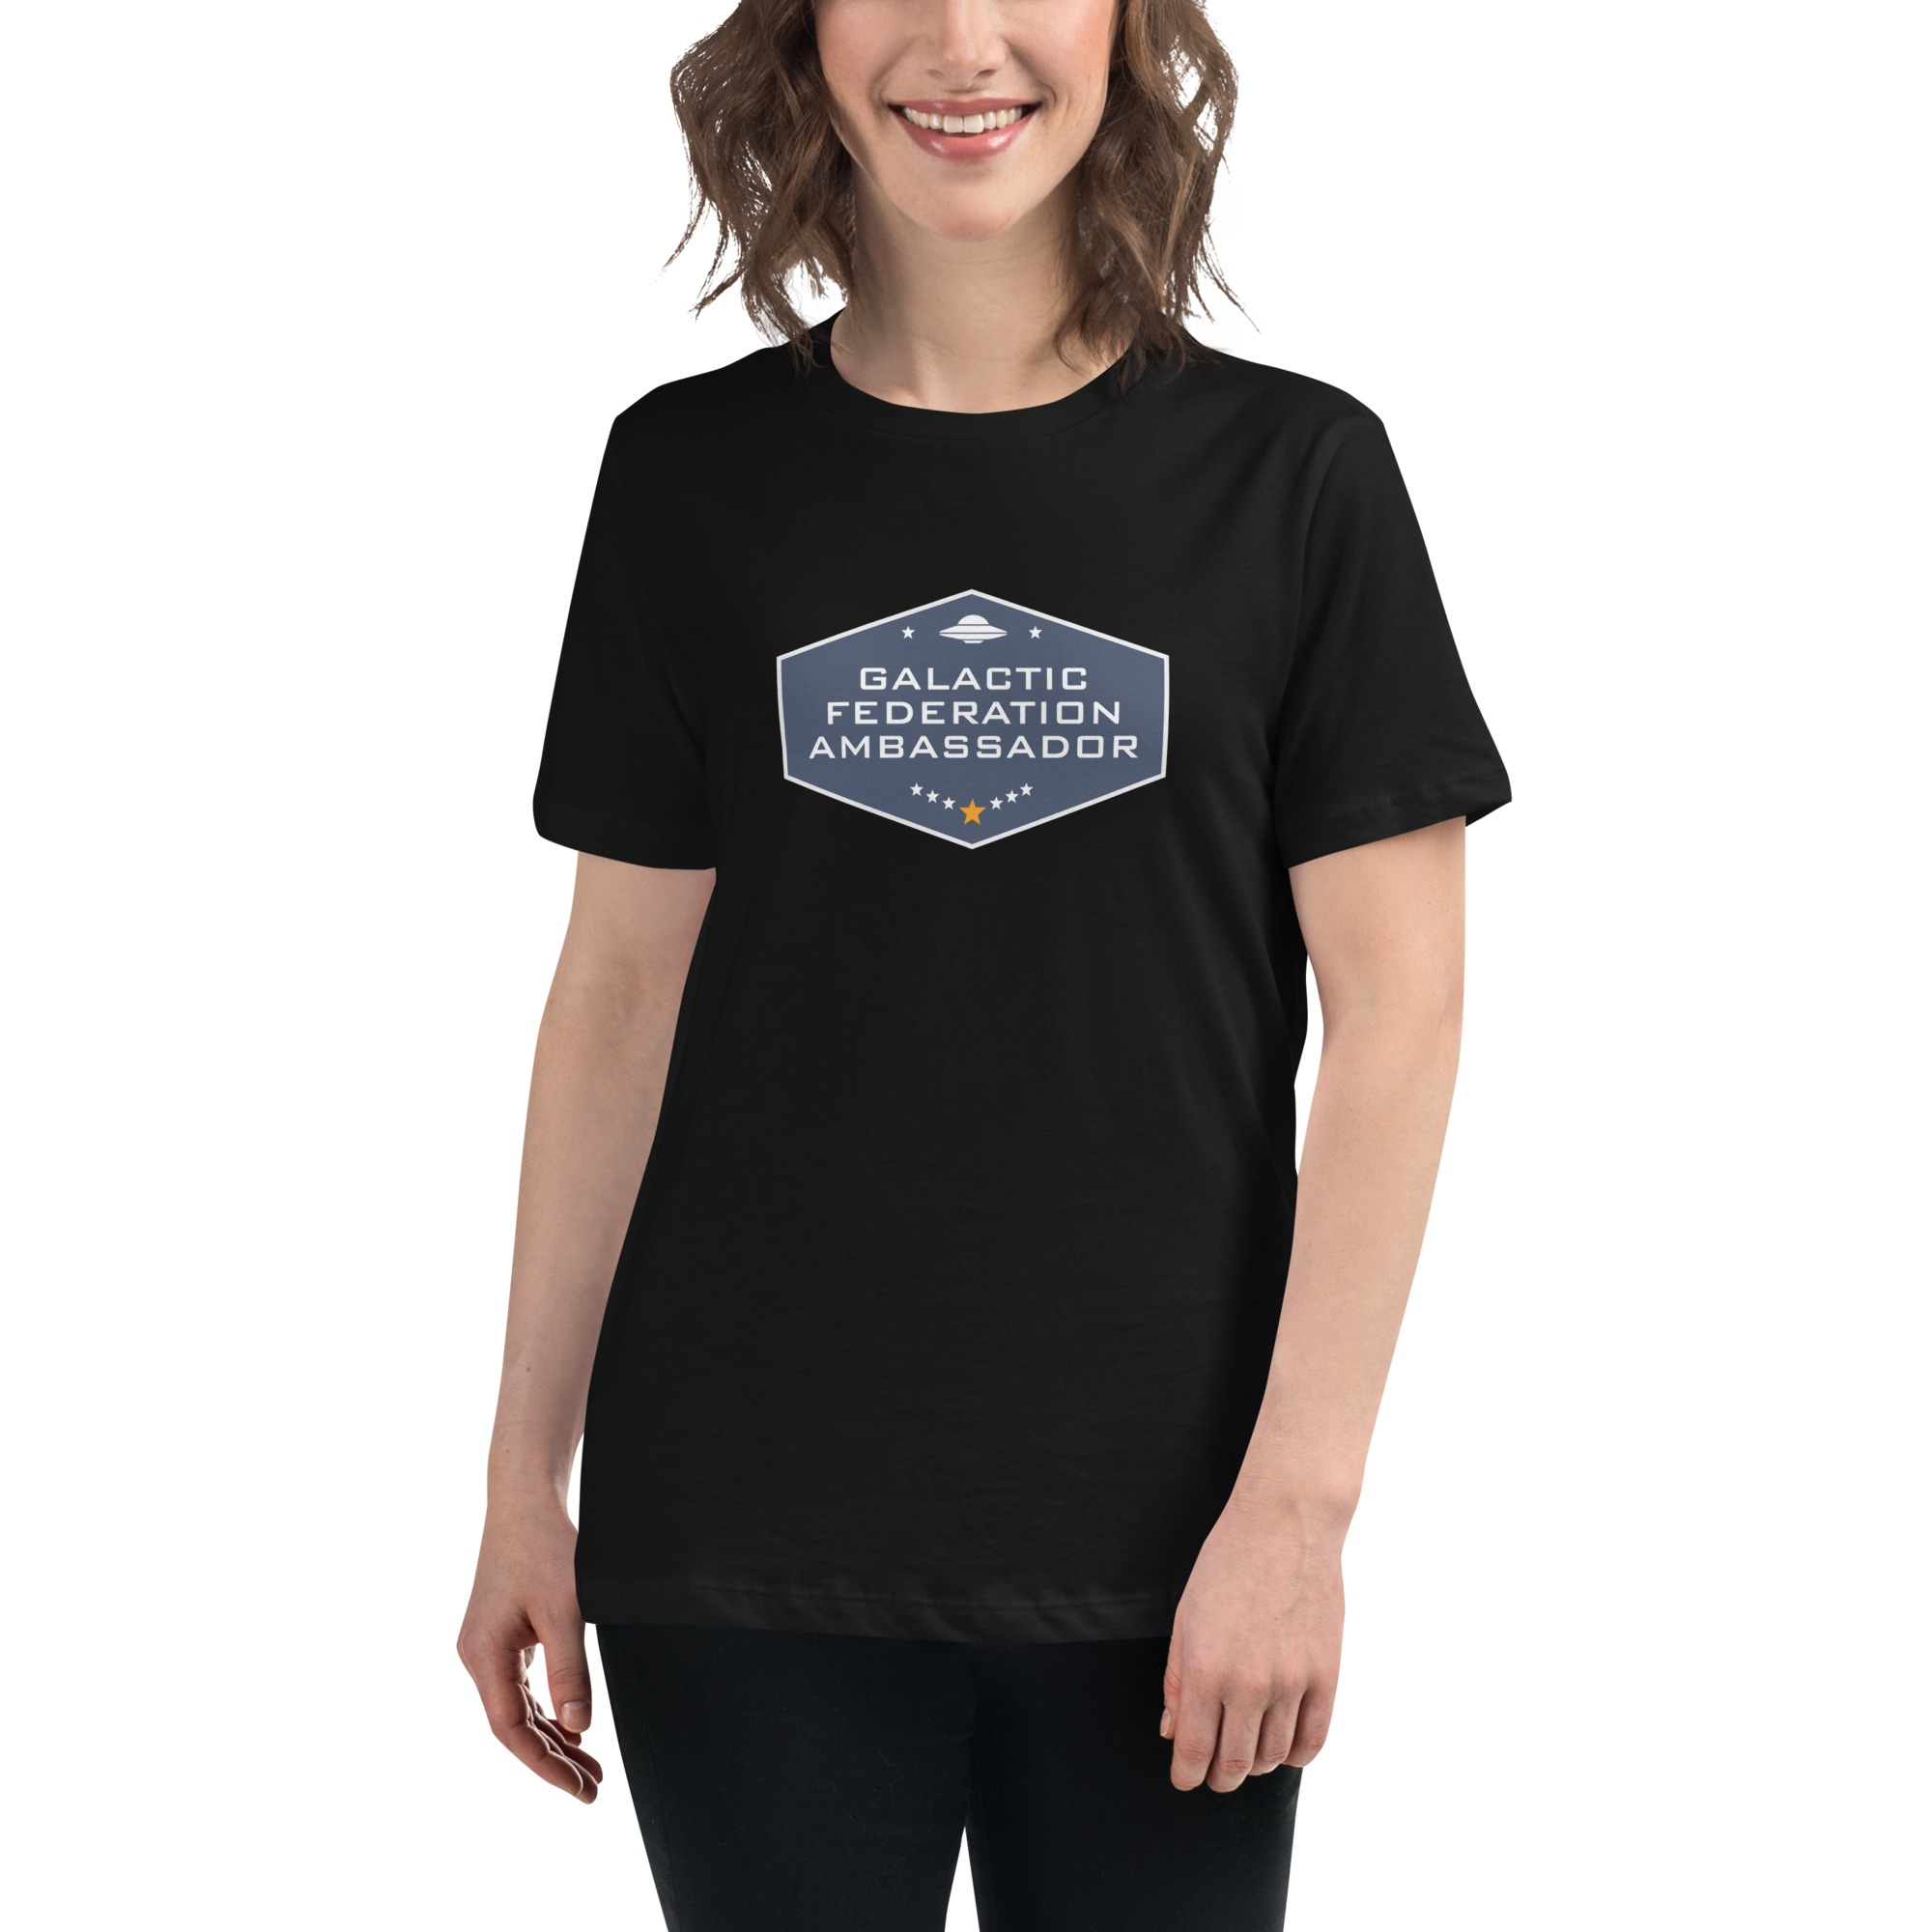 Galactic Federation Ambassador Women's T shirt Black